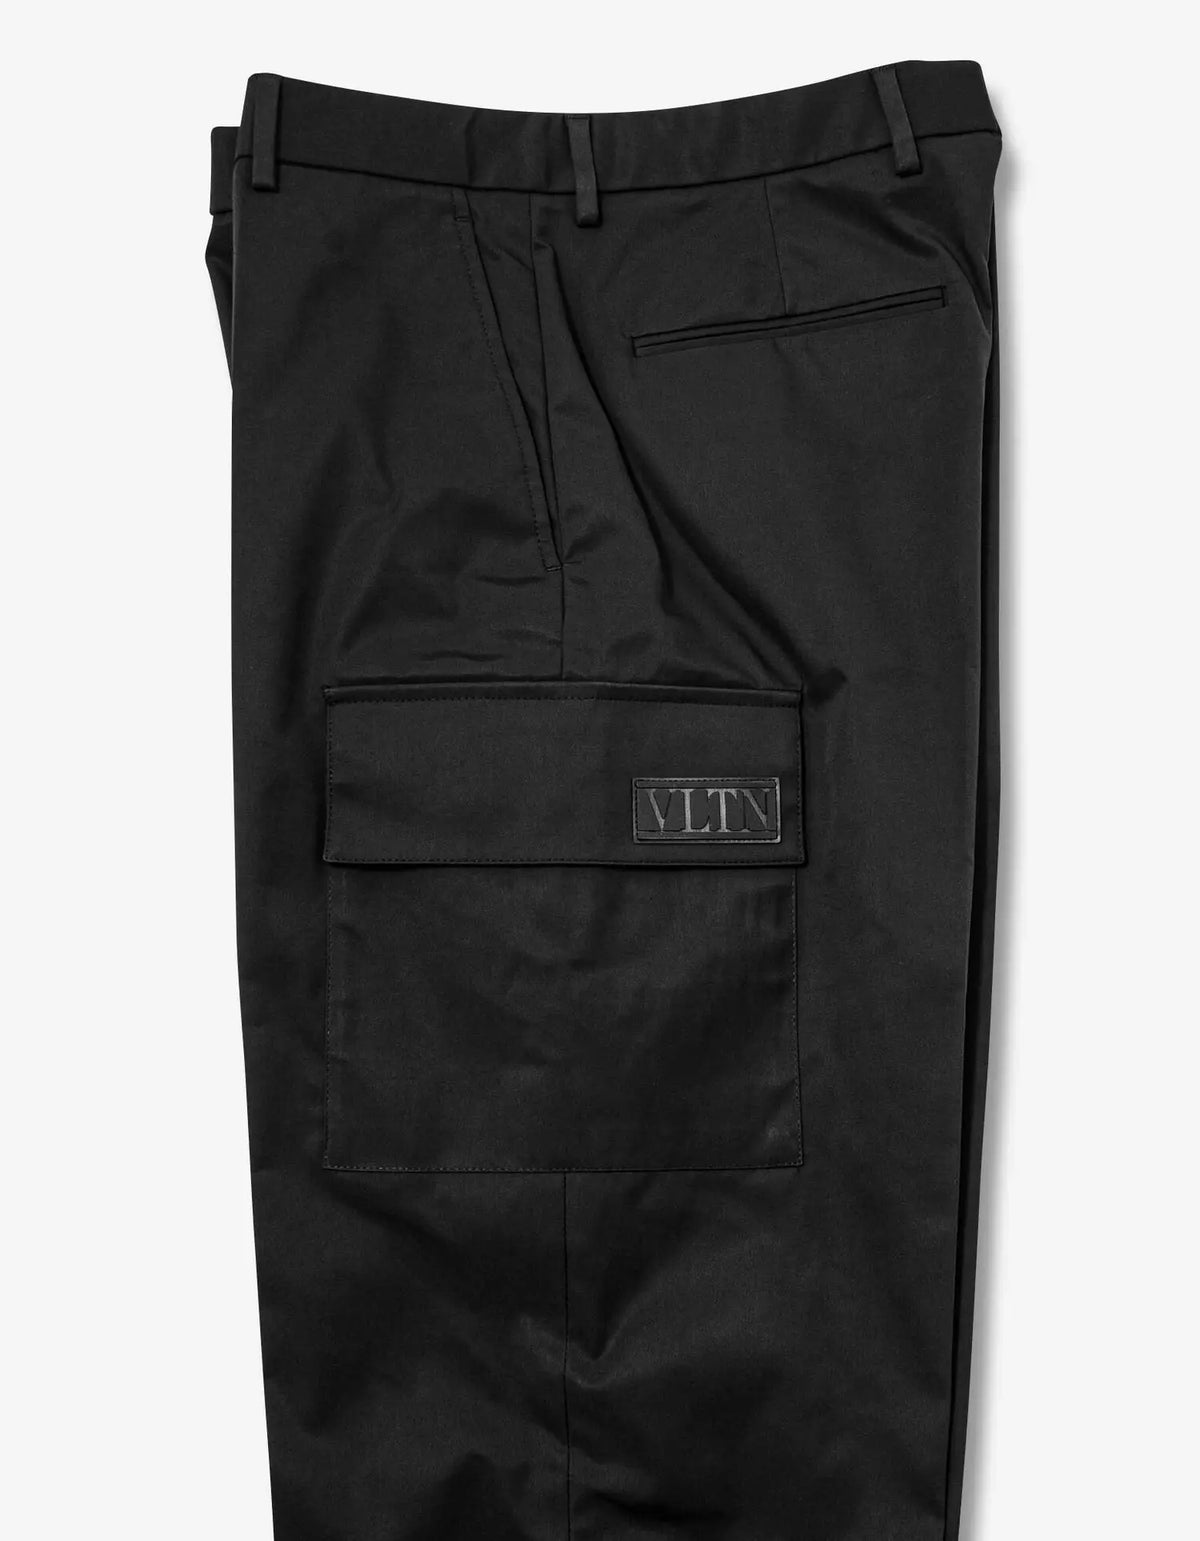 Valentino Garavani Black VLTN Tag Cargo Trousers